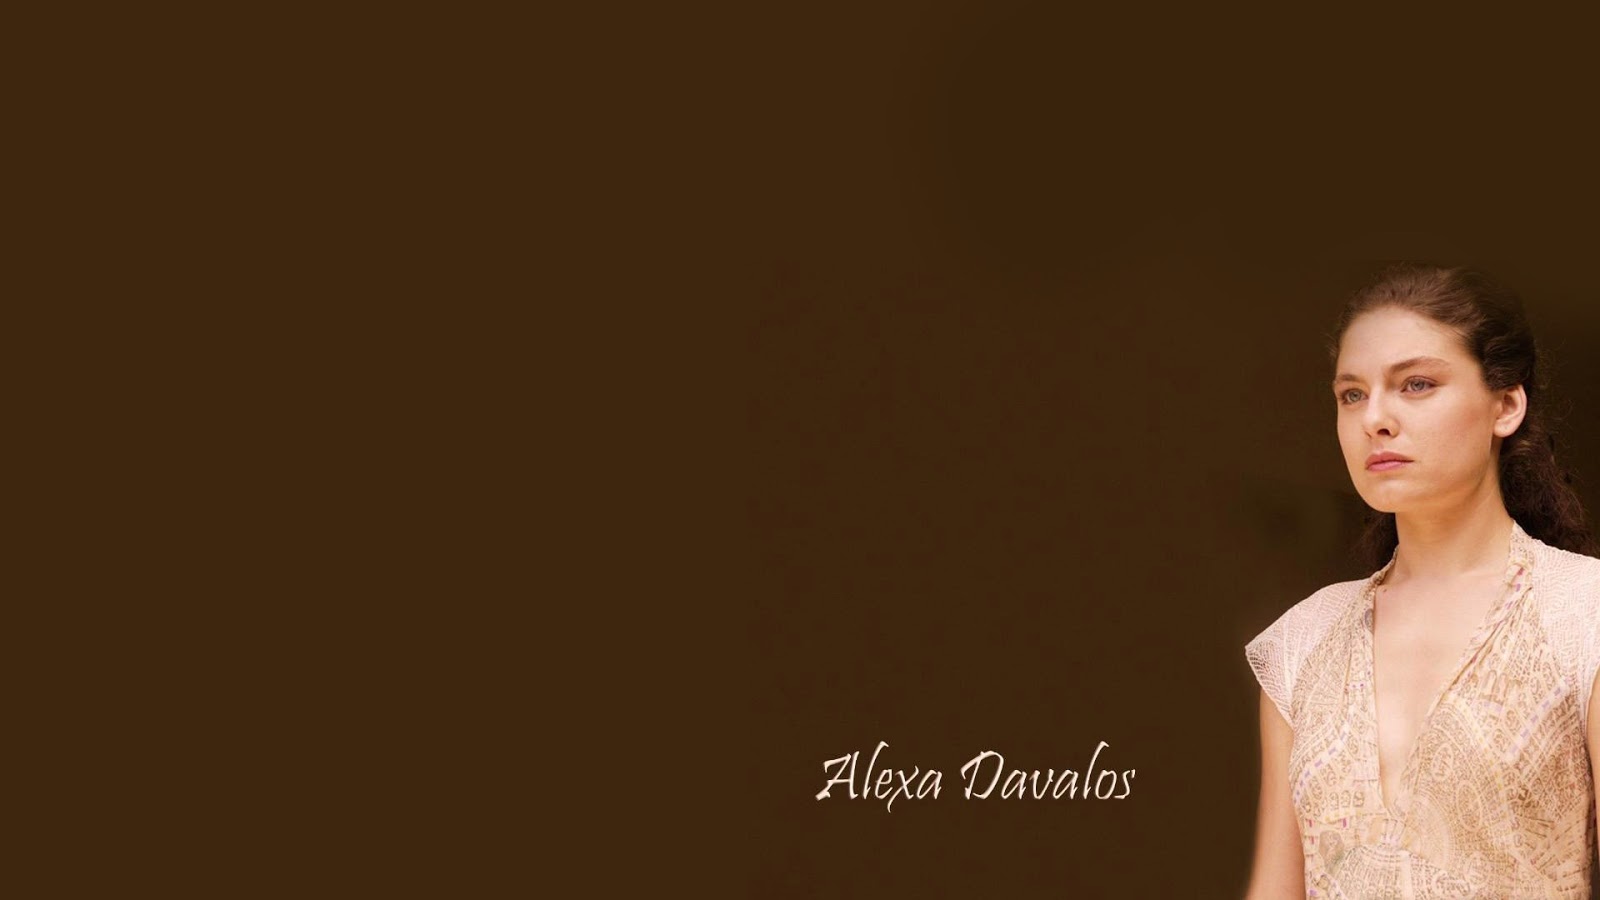 Alexa Davalos HD Images and Wallpapers - Hollywood Actress